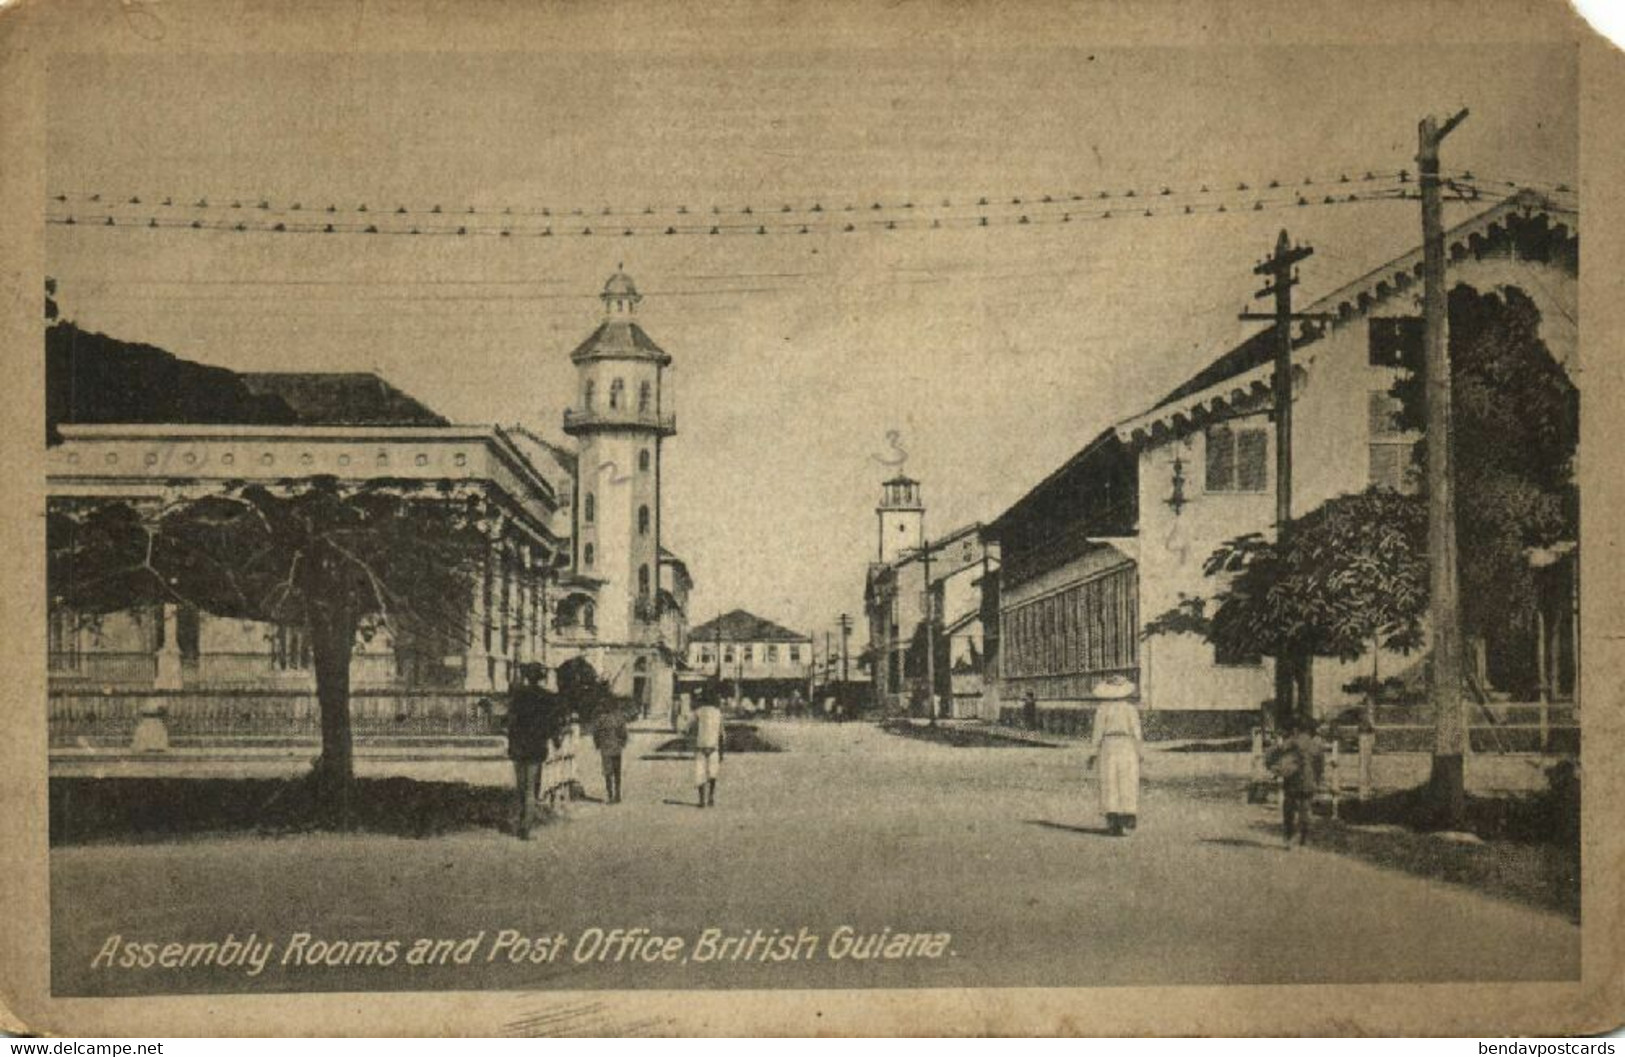 British Guiana, Guyana, Demerara, GEORGETOWN, Assembly Rooms, Post Office (1920s) Postcard - Guyana (formerly British Guyana)